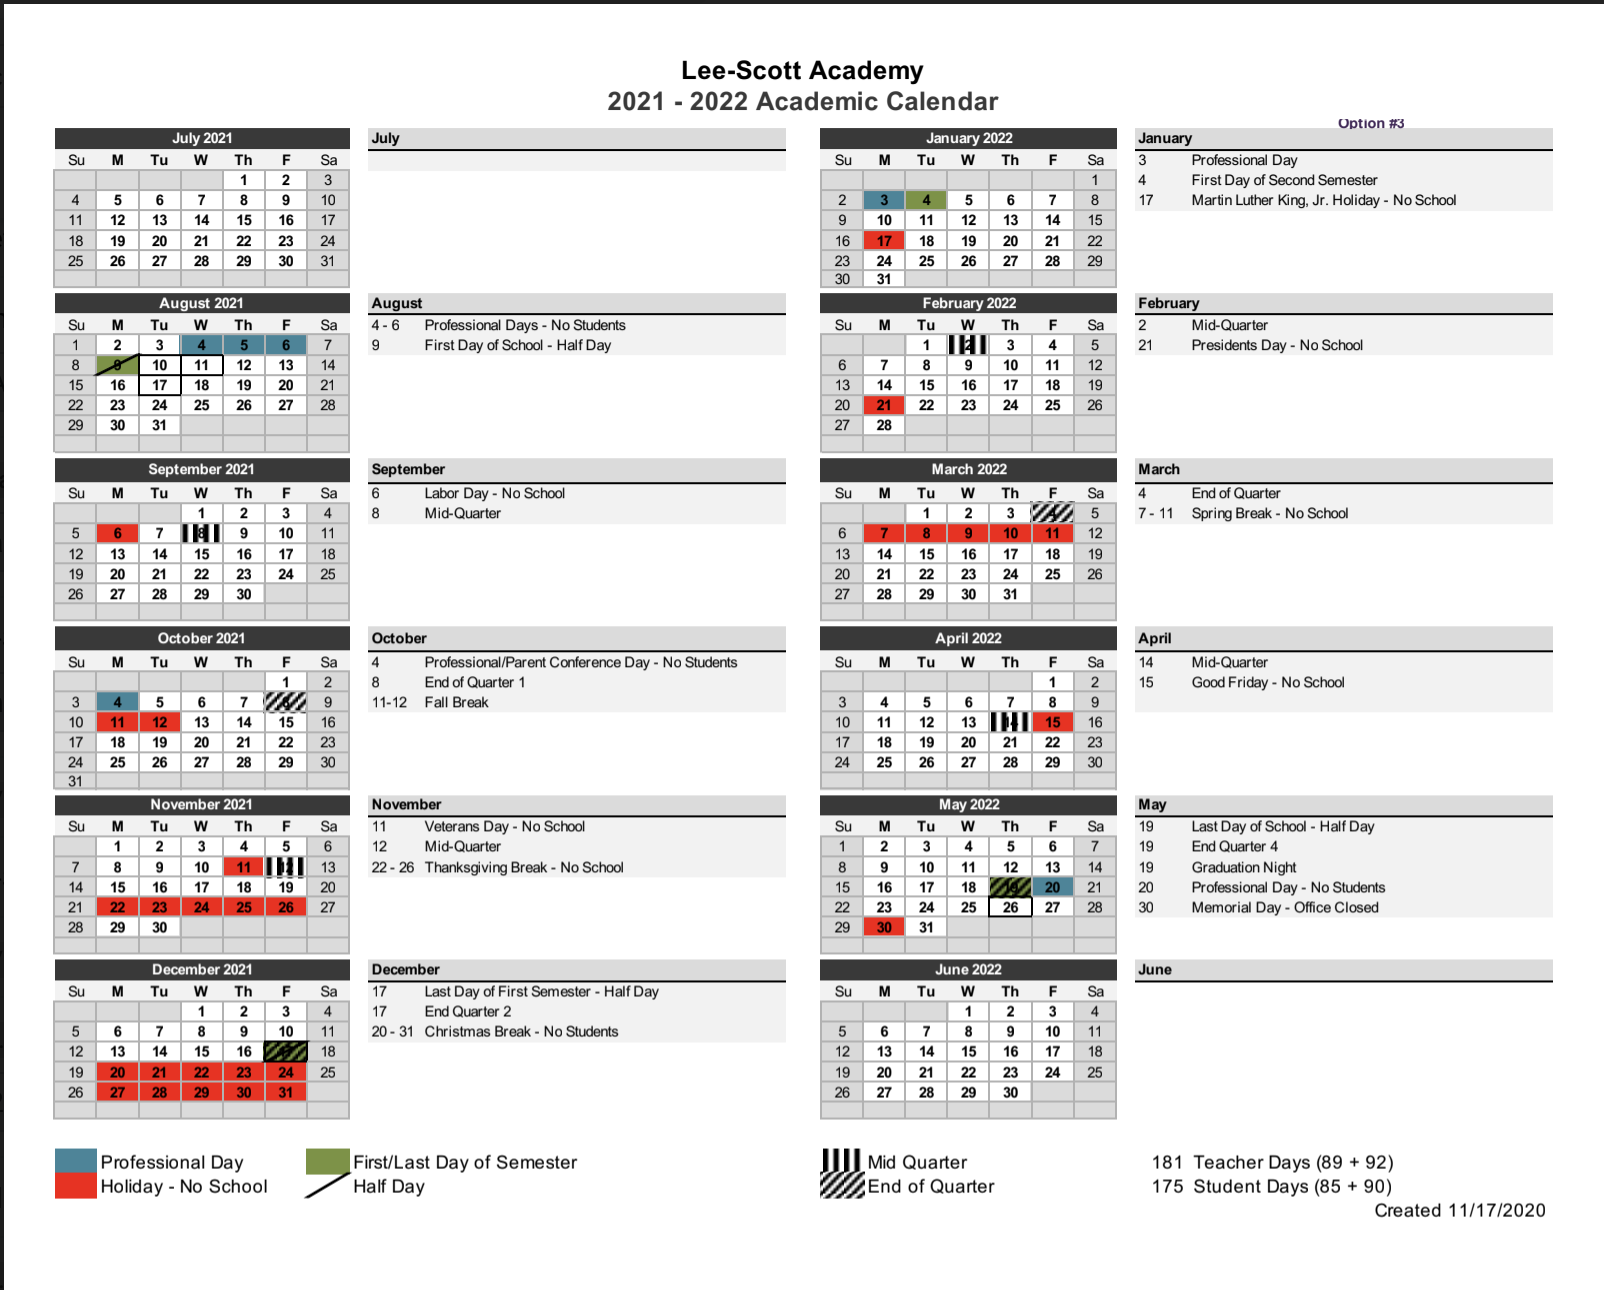 Lee University Calendar 2022 Academic Calendar – Lee-Scott Academy